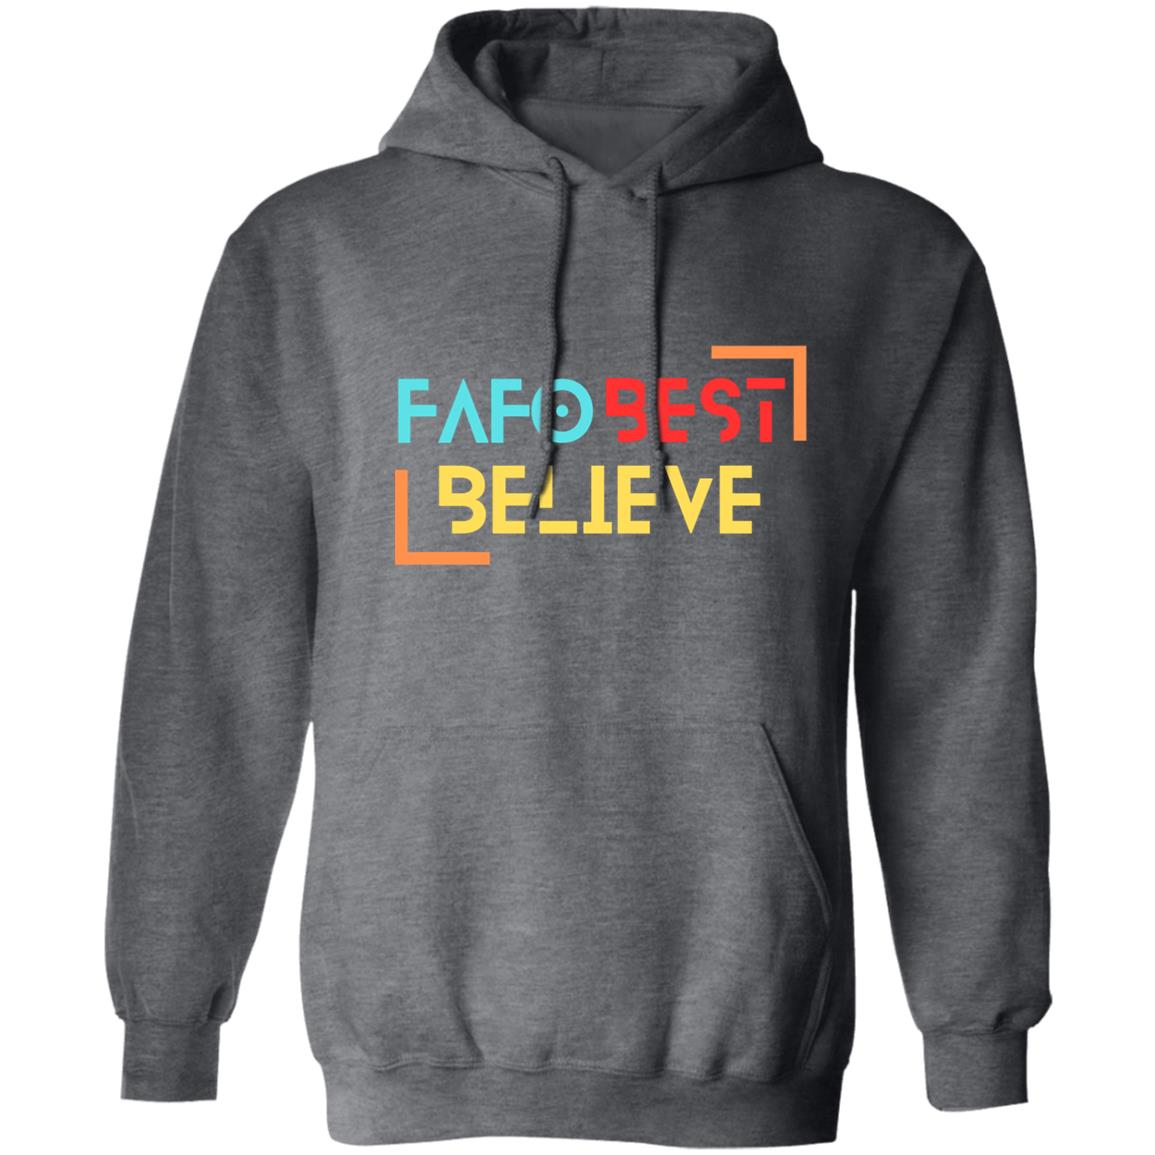 FAFO Best Believe Pullover Hoodie 8 oz (Closeout) - Expressive DeZien 